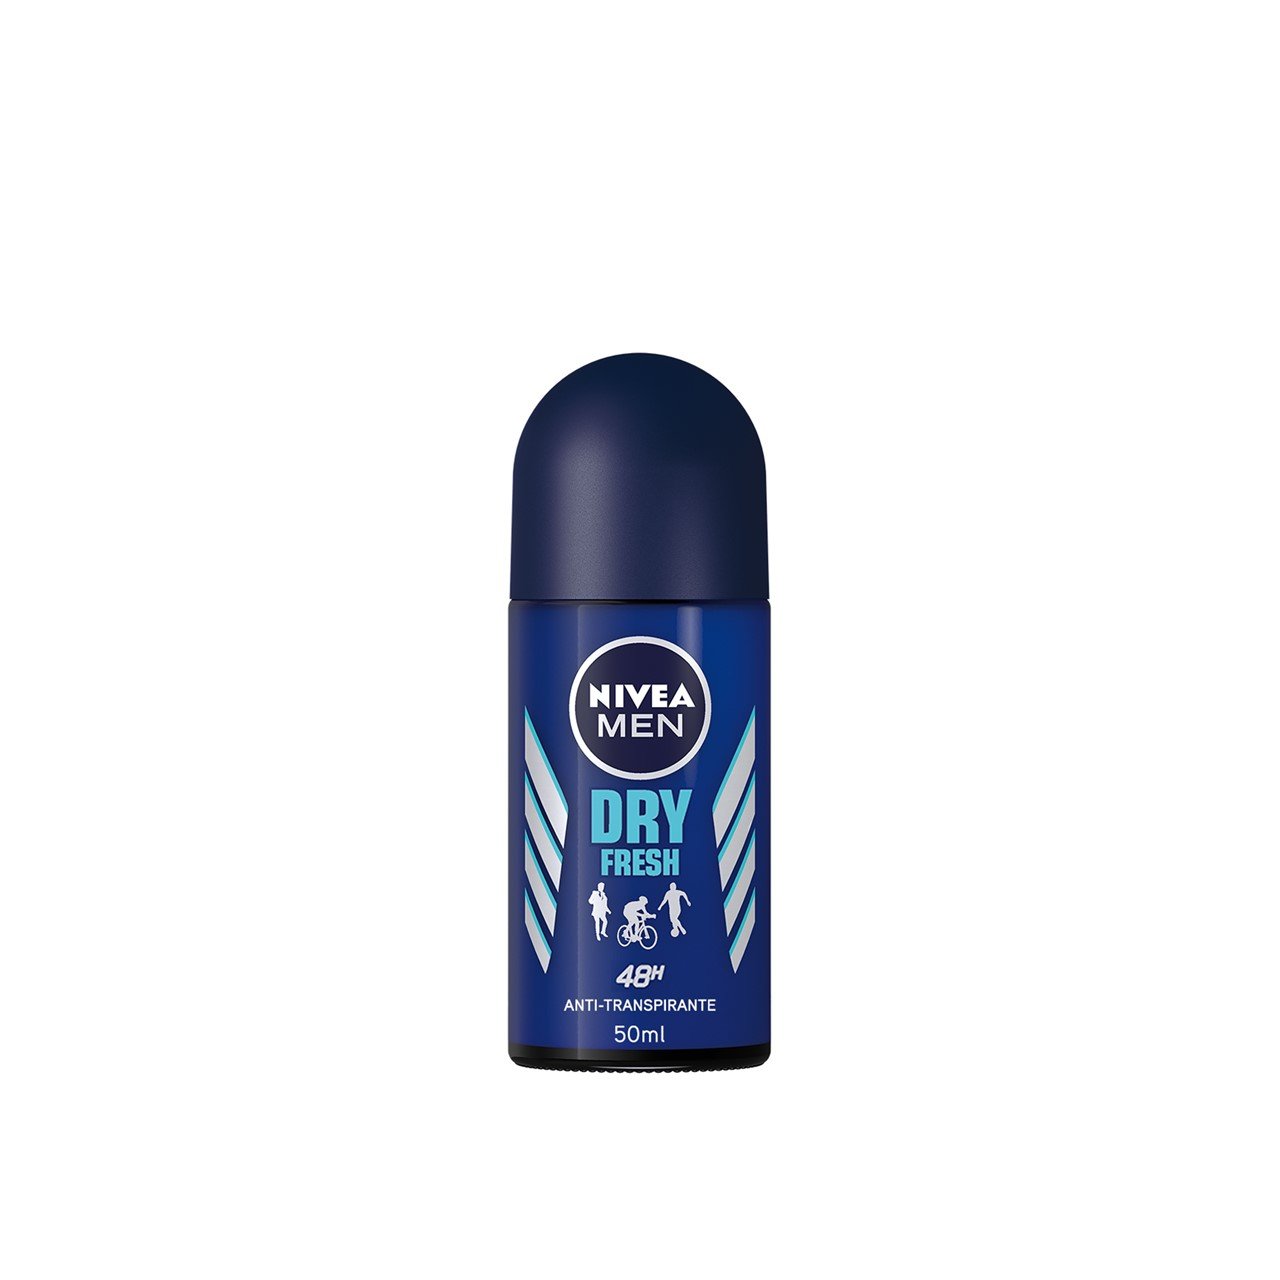 Nivea Men Dry Fresh 48h Deodorant Anti-Perspirant Roll-On 50ml (1.69fl oz)